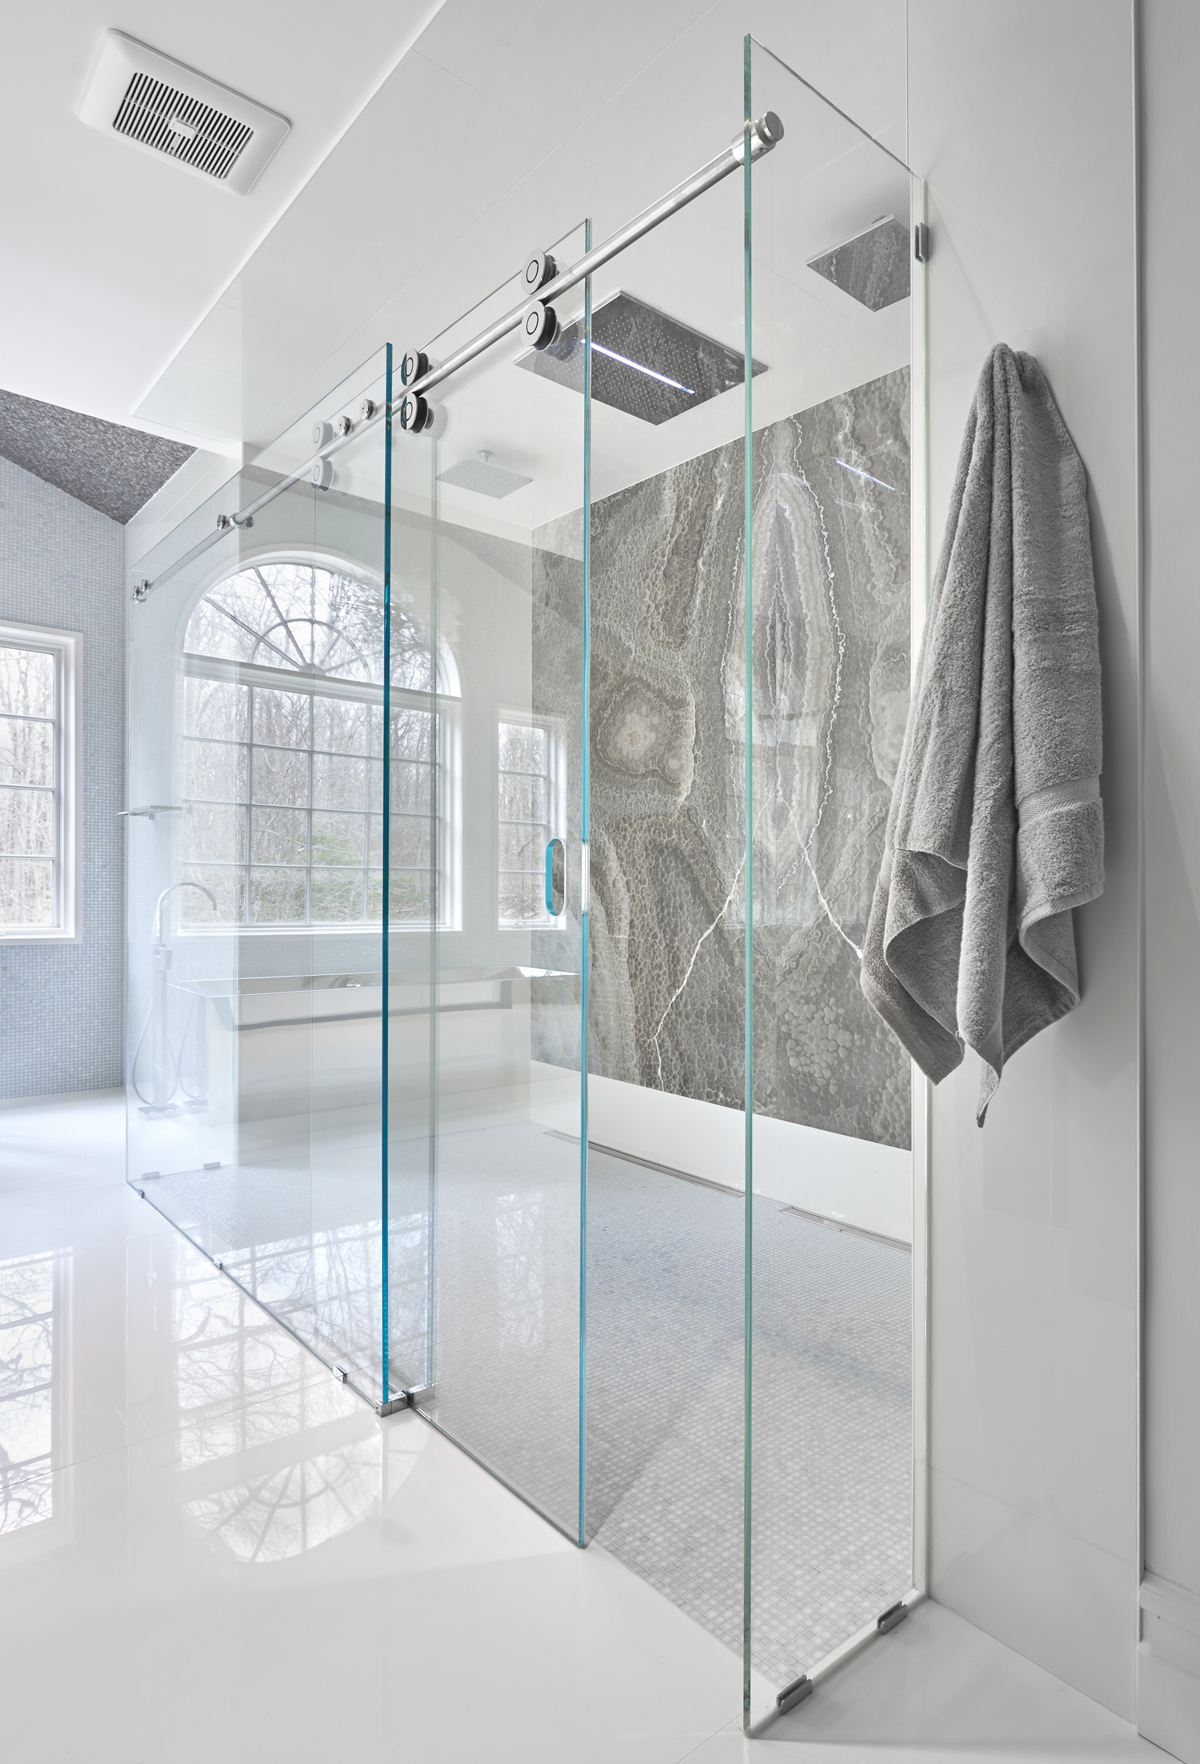 Sliding Shower Door - American Shower Glass